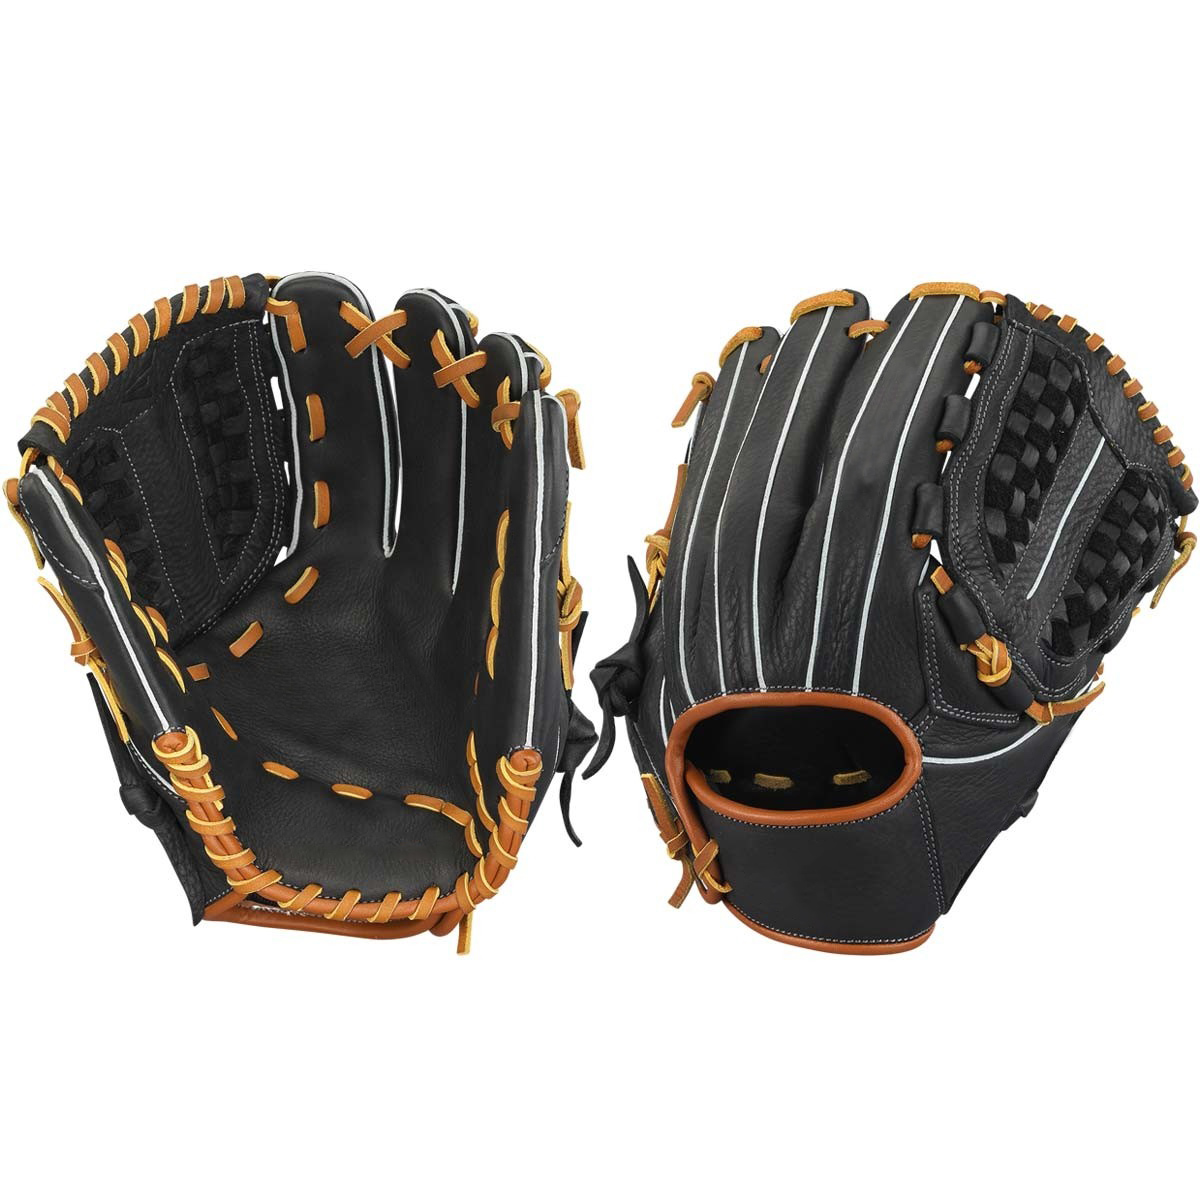 Super soft leather comfortable strength palm black baseball gloves